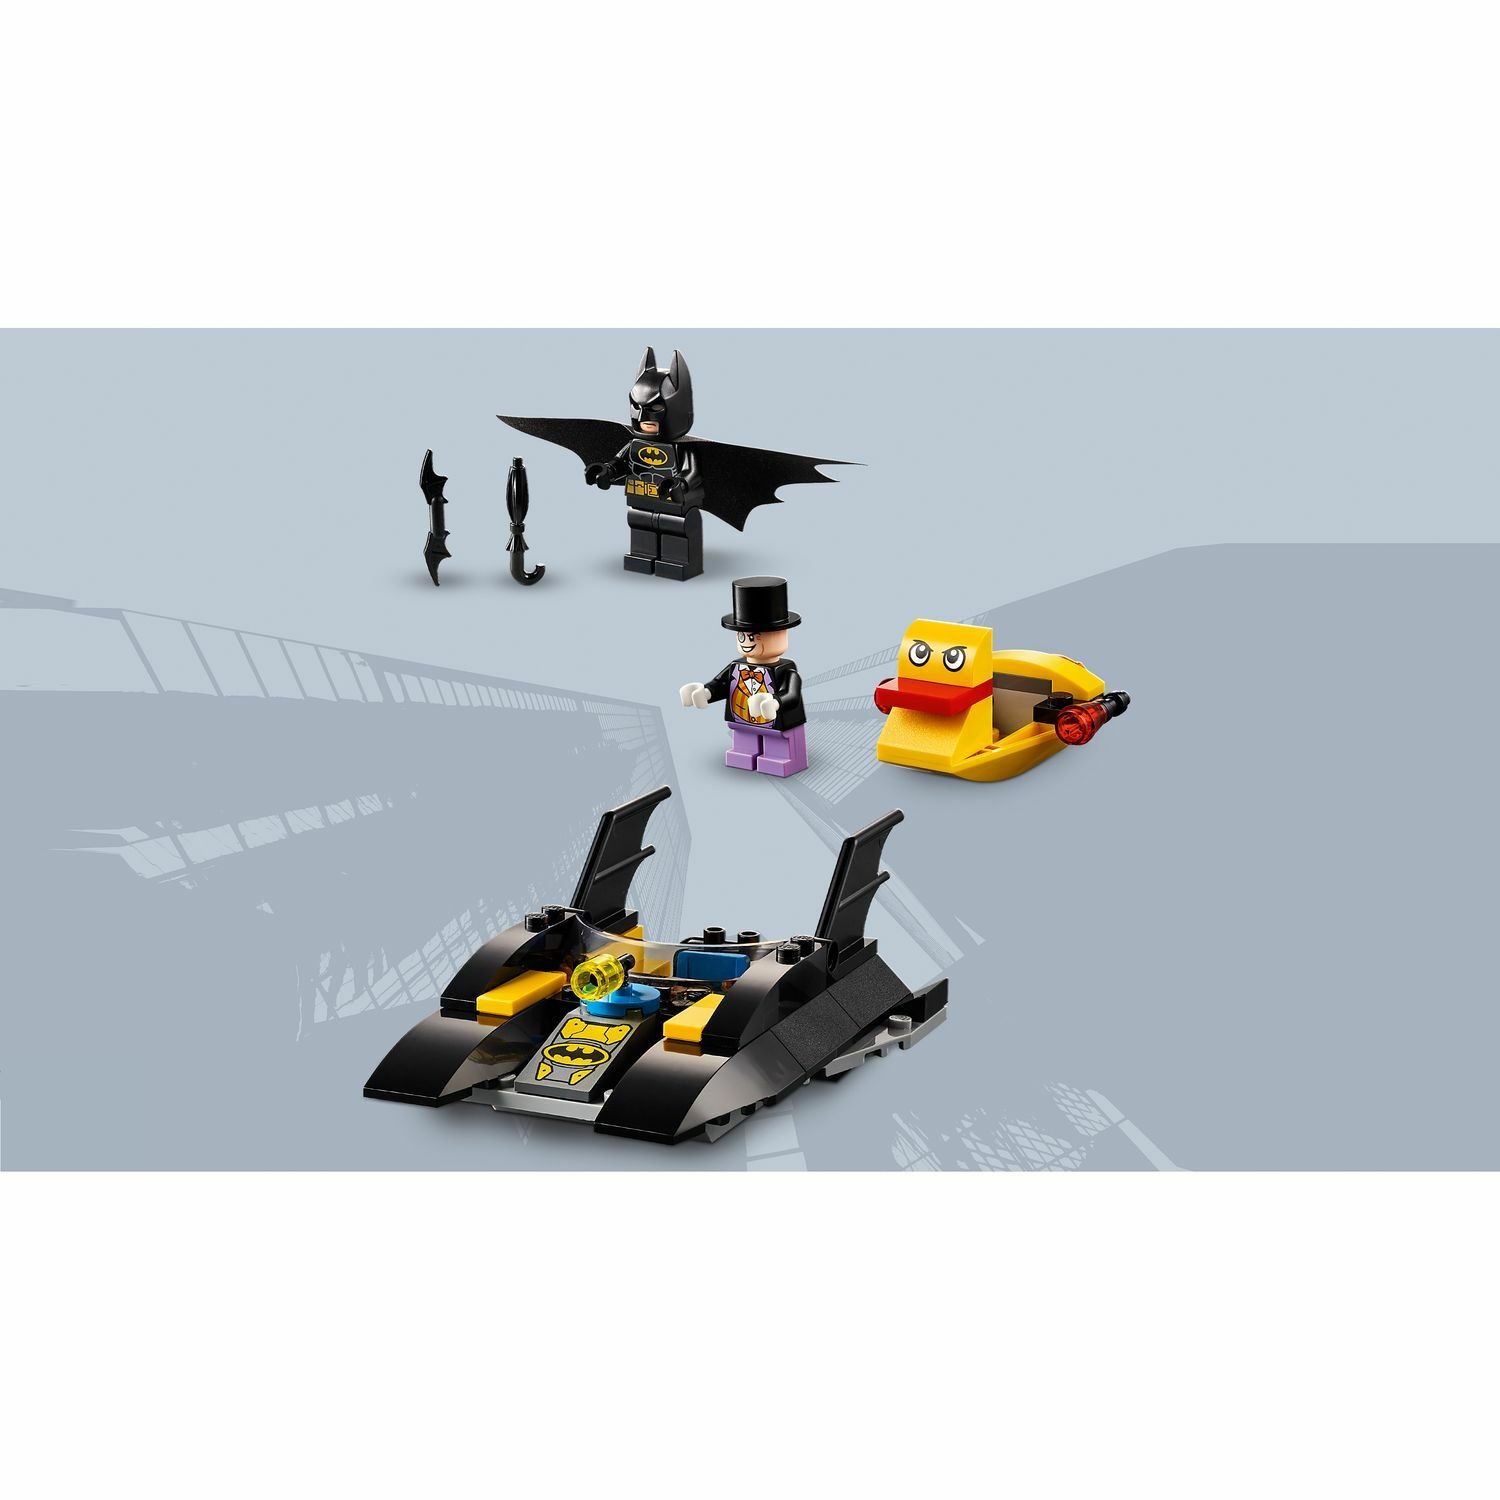 Lego Super Heroes 76158 Погоня за Пингвином на Бэткатере